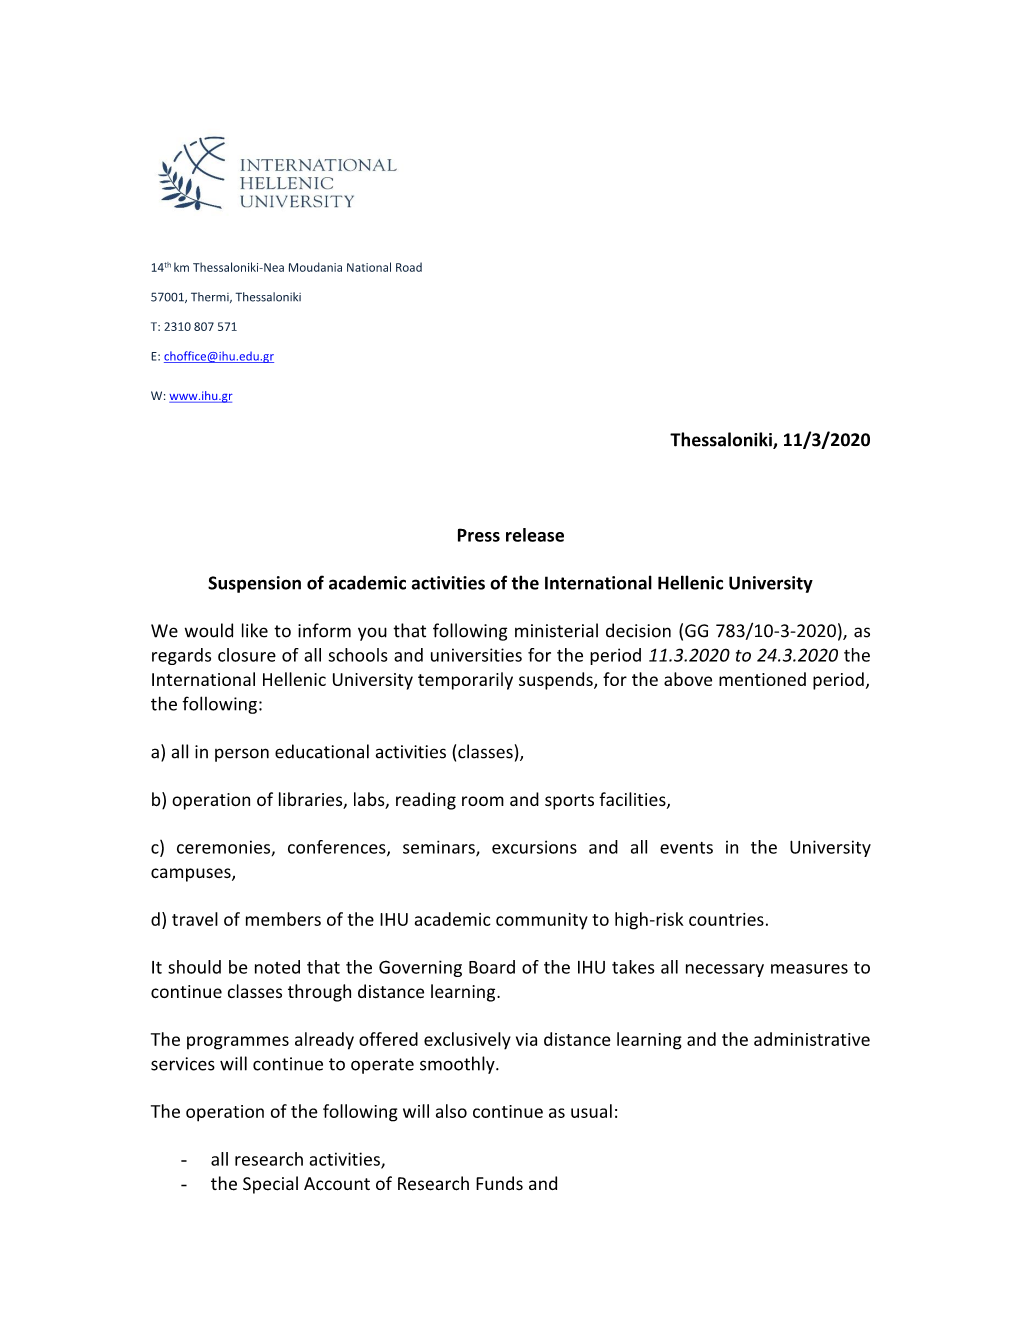 Thessaloniki, 11/3/2020 Press Release Suspension of Academic Activities